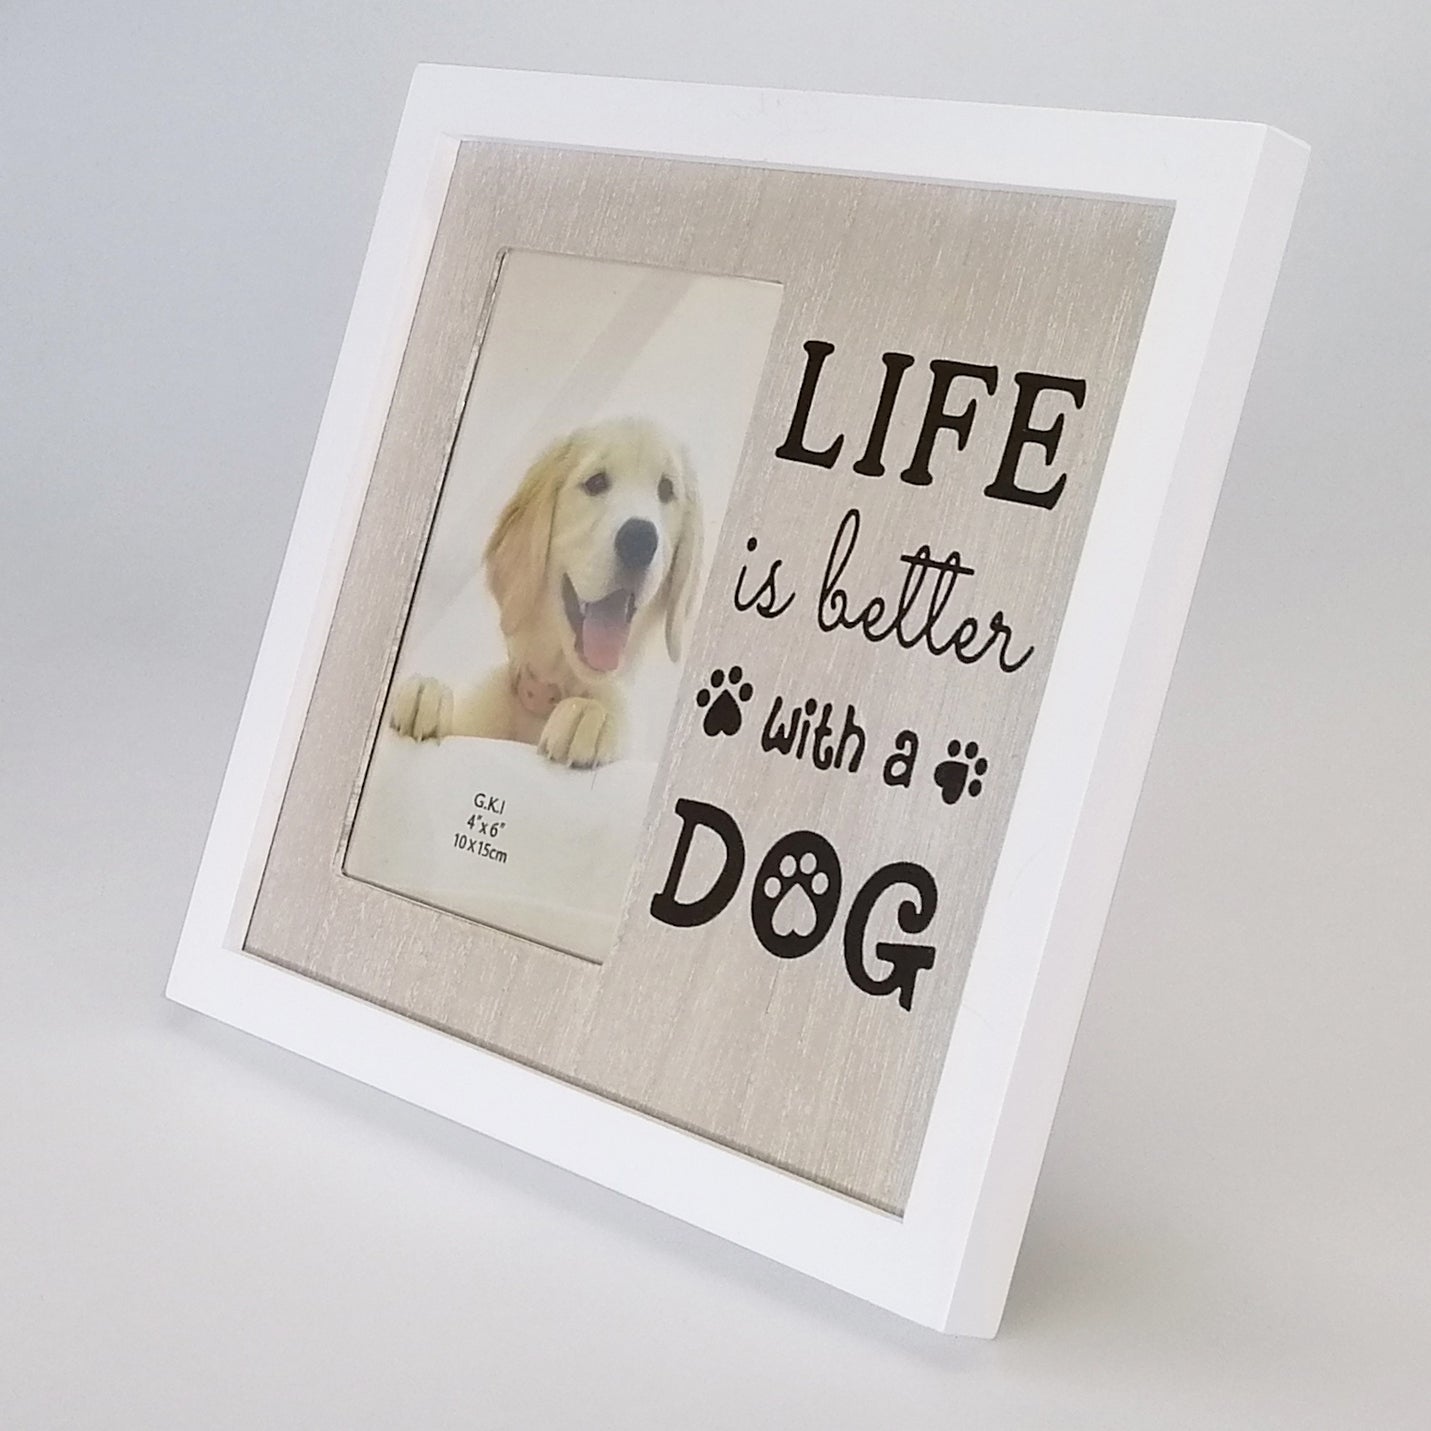 Sentimental Frame 4"x 6" - Life with a Dog